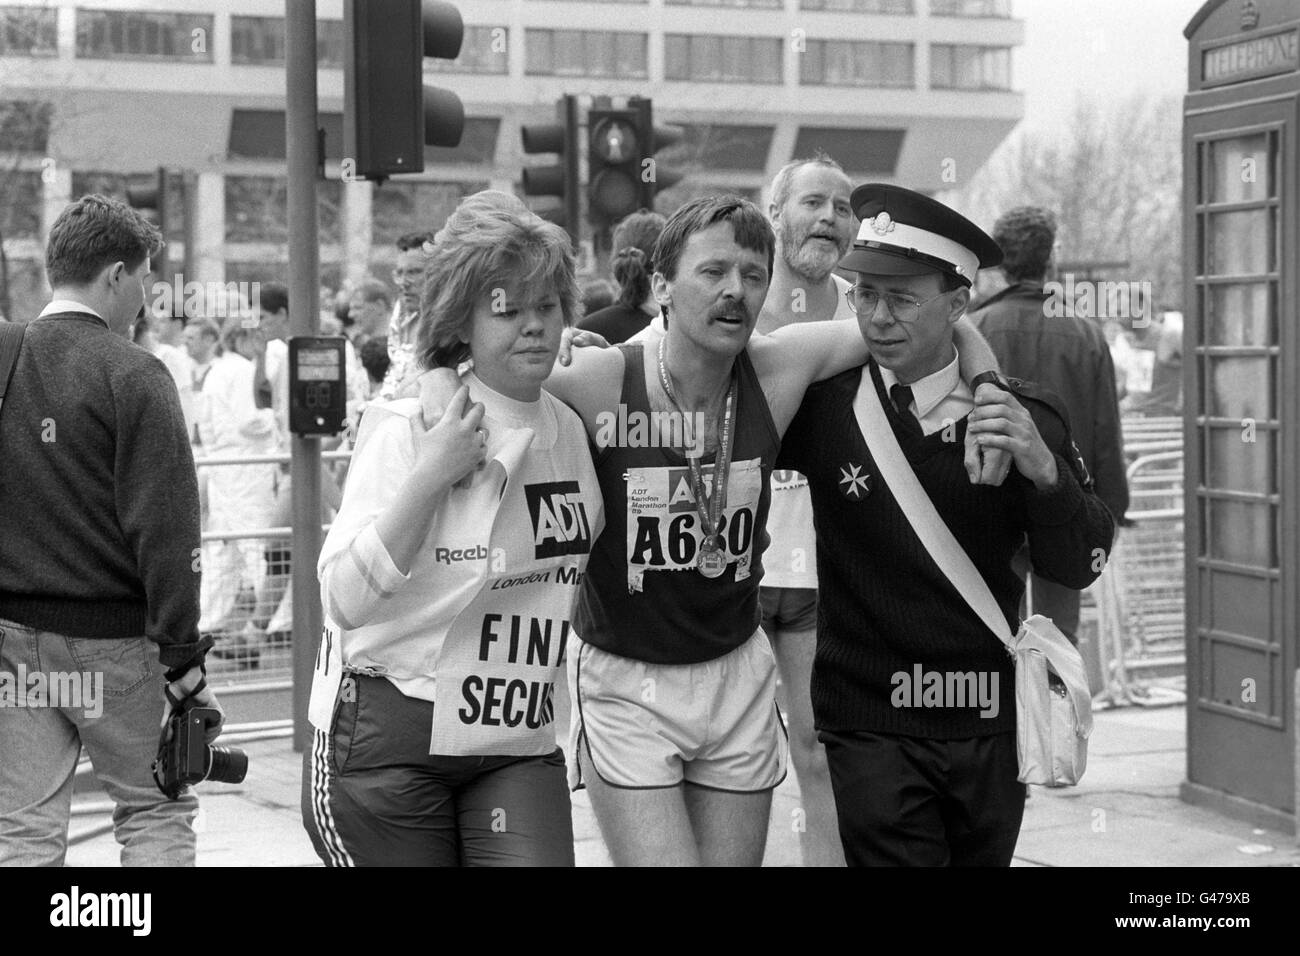 Athletics - 1989 ADT London Marathon Stock Photo